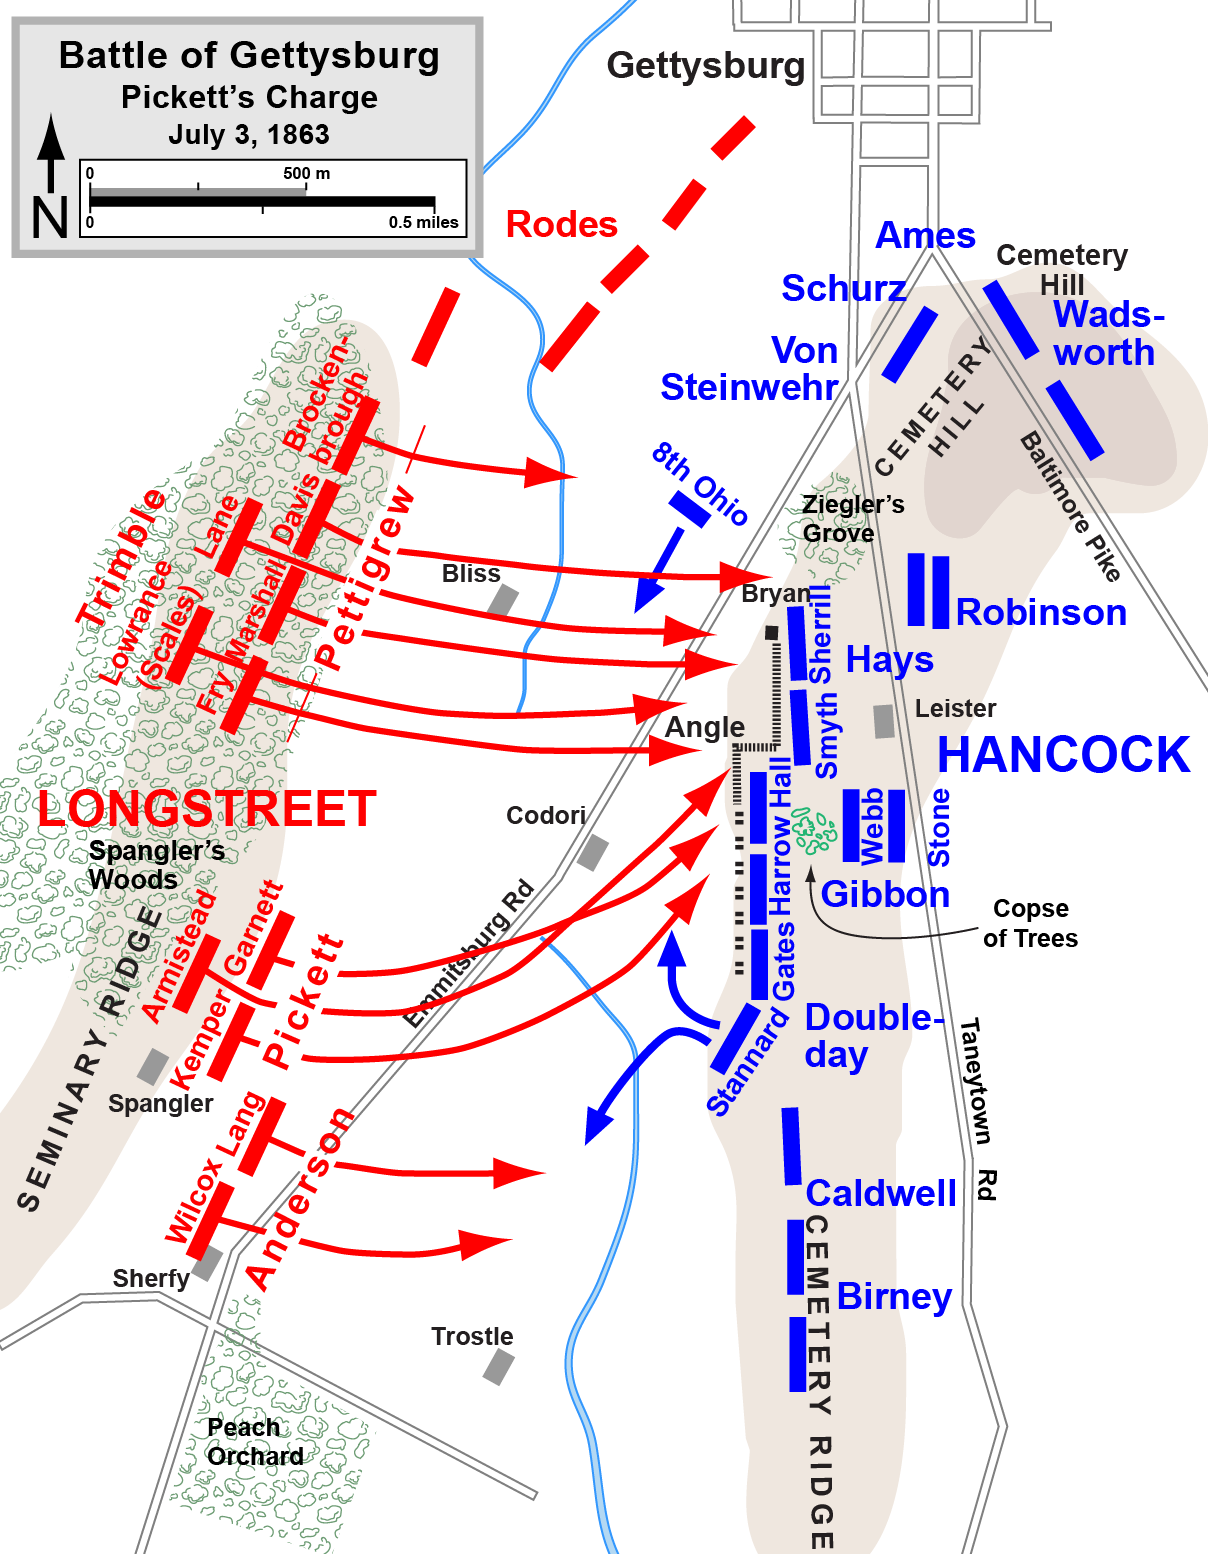 Hal Jespersen's map of Pickett's Charge